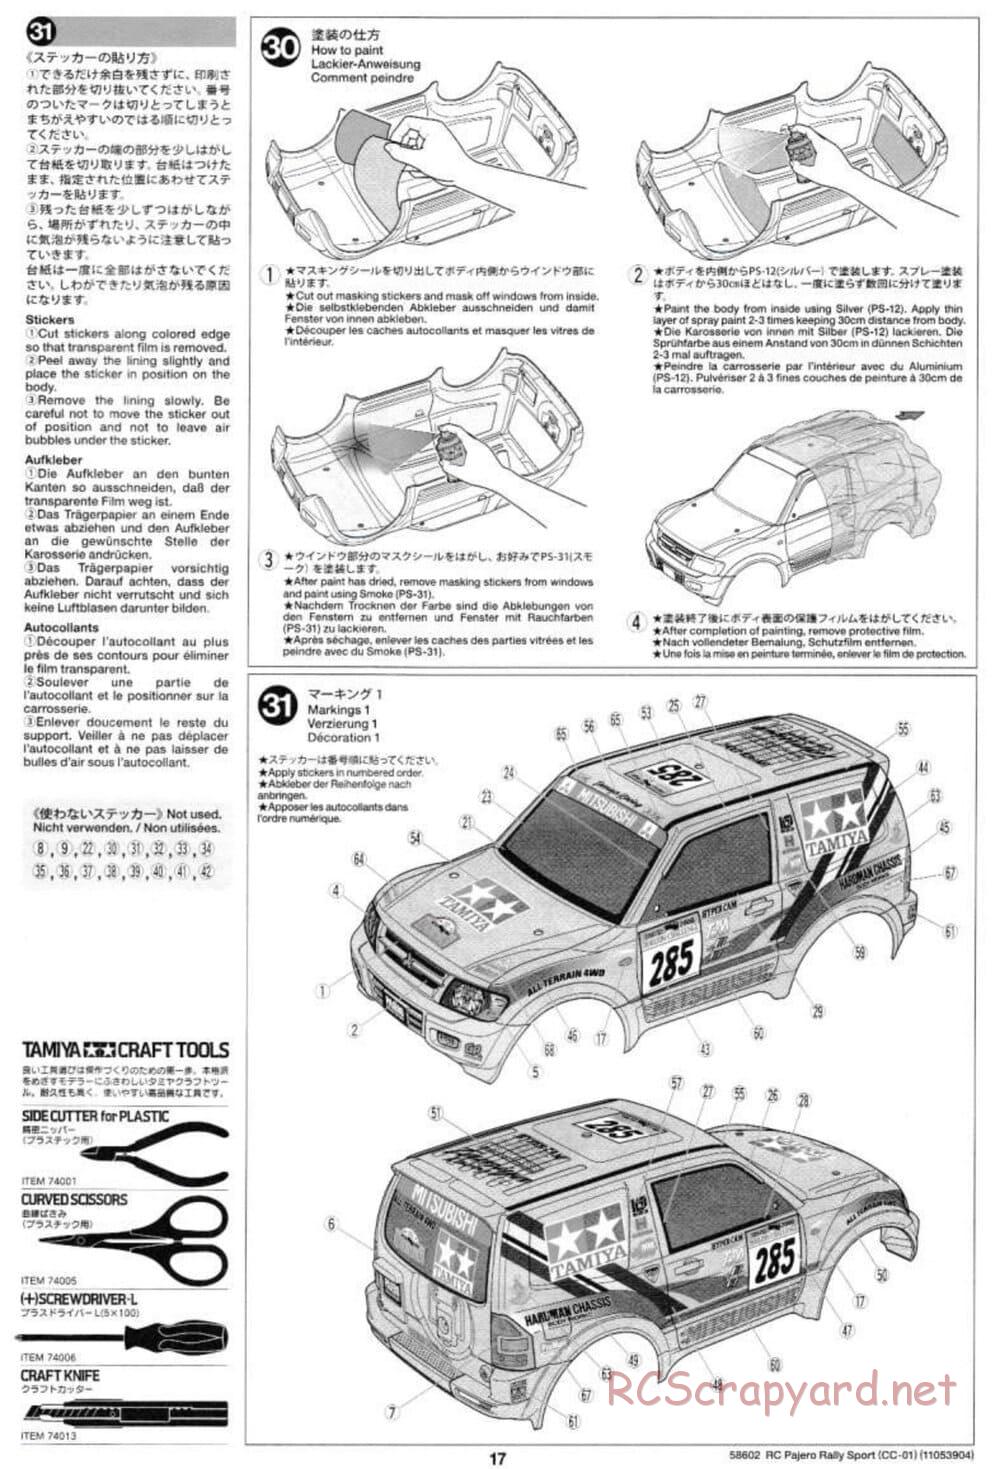 Tamiya - Mitsubishi Pajero Rally Sport - CC-01 Chassis - Manual - Page 17